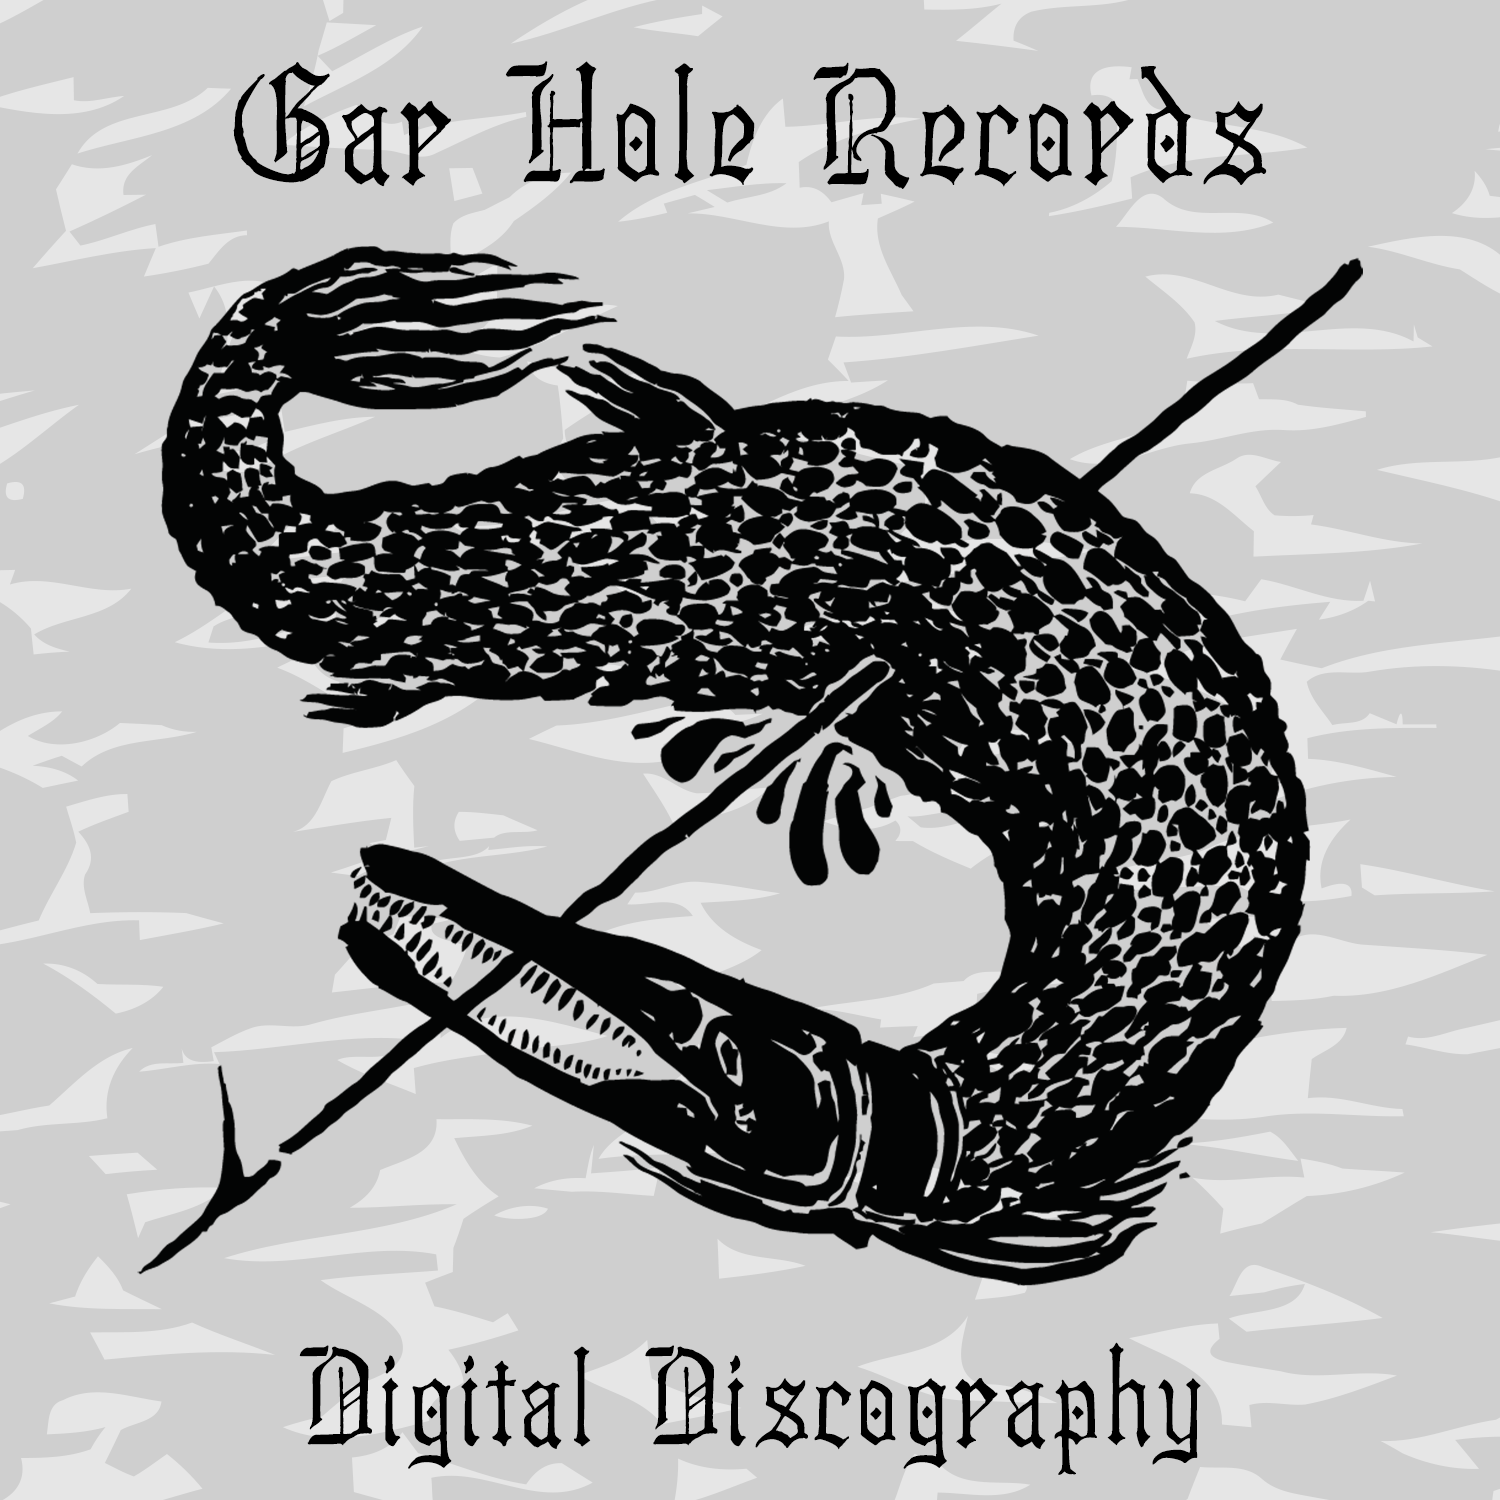 Gar Hole Records Digital Discography